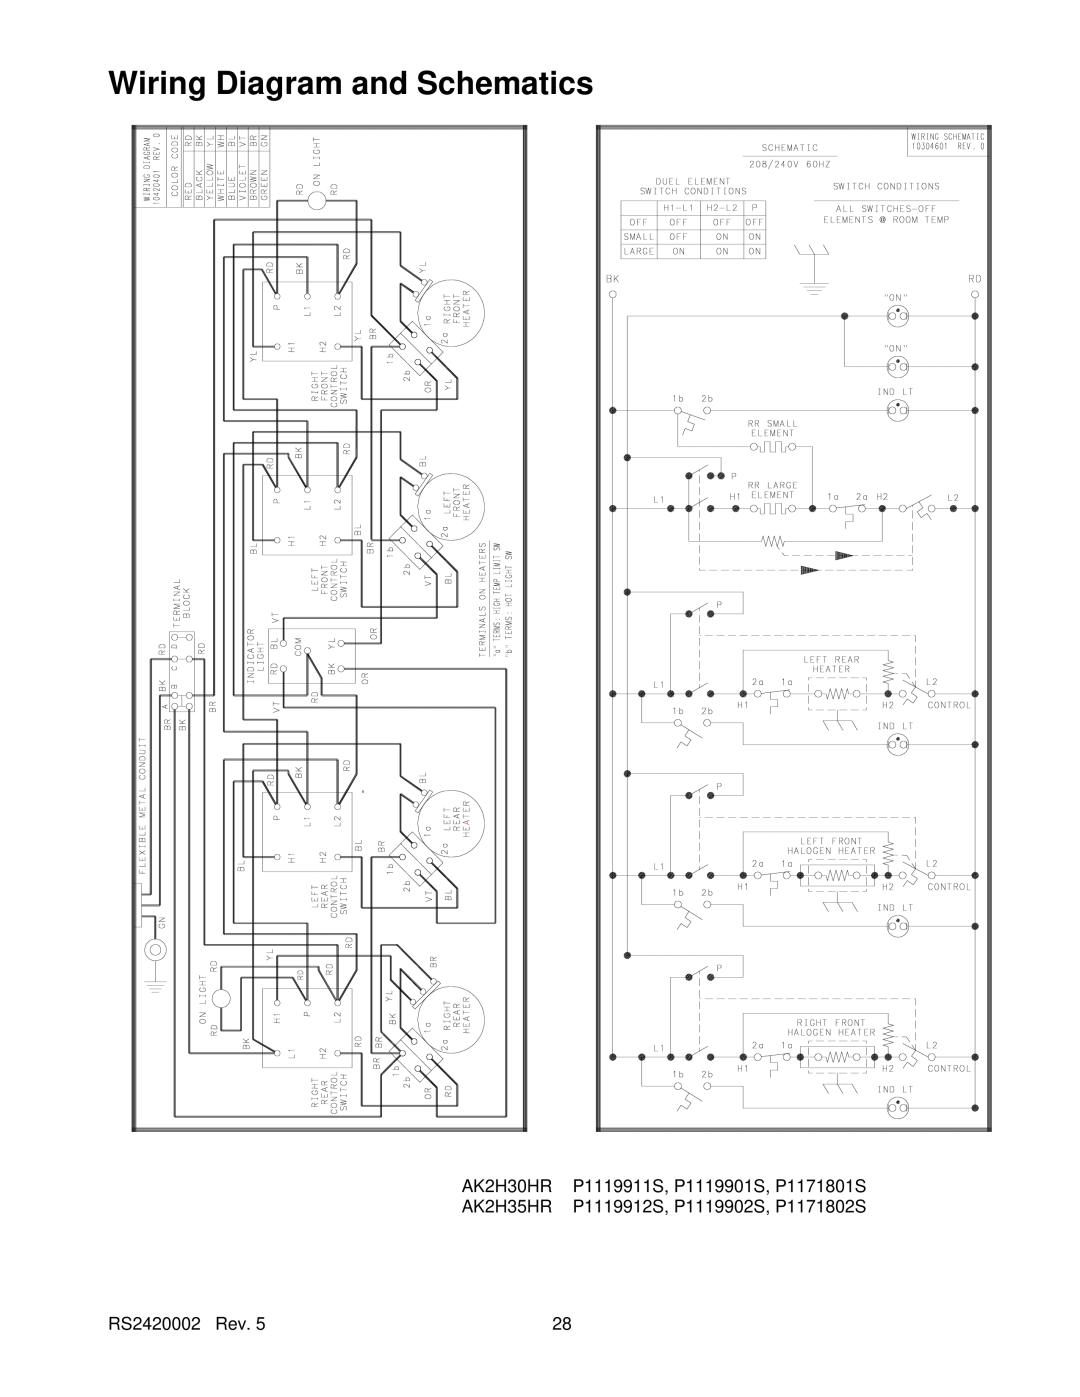 Amana AK2T30/36E1/W1 Wiring Diagram and Schematics, AK2H30HR, P1119911S, P1119901S, P1171801S, AK2H35HR, RS2420002 Rev 